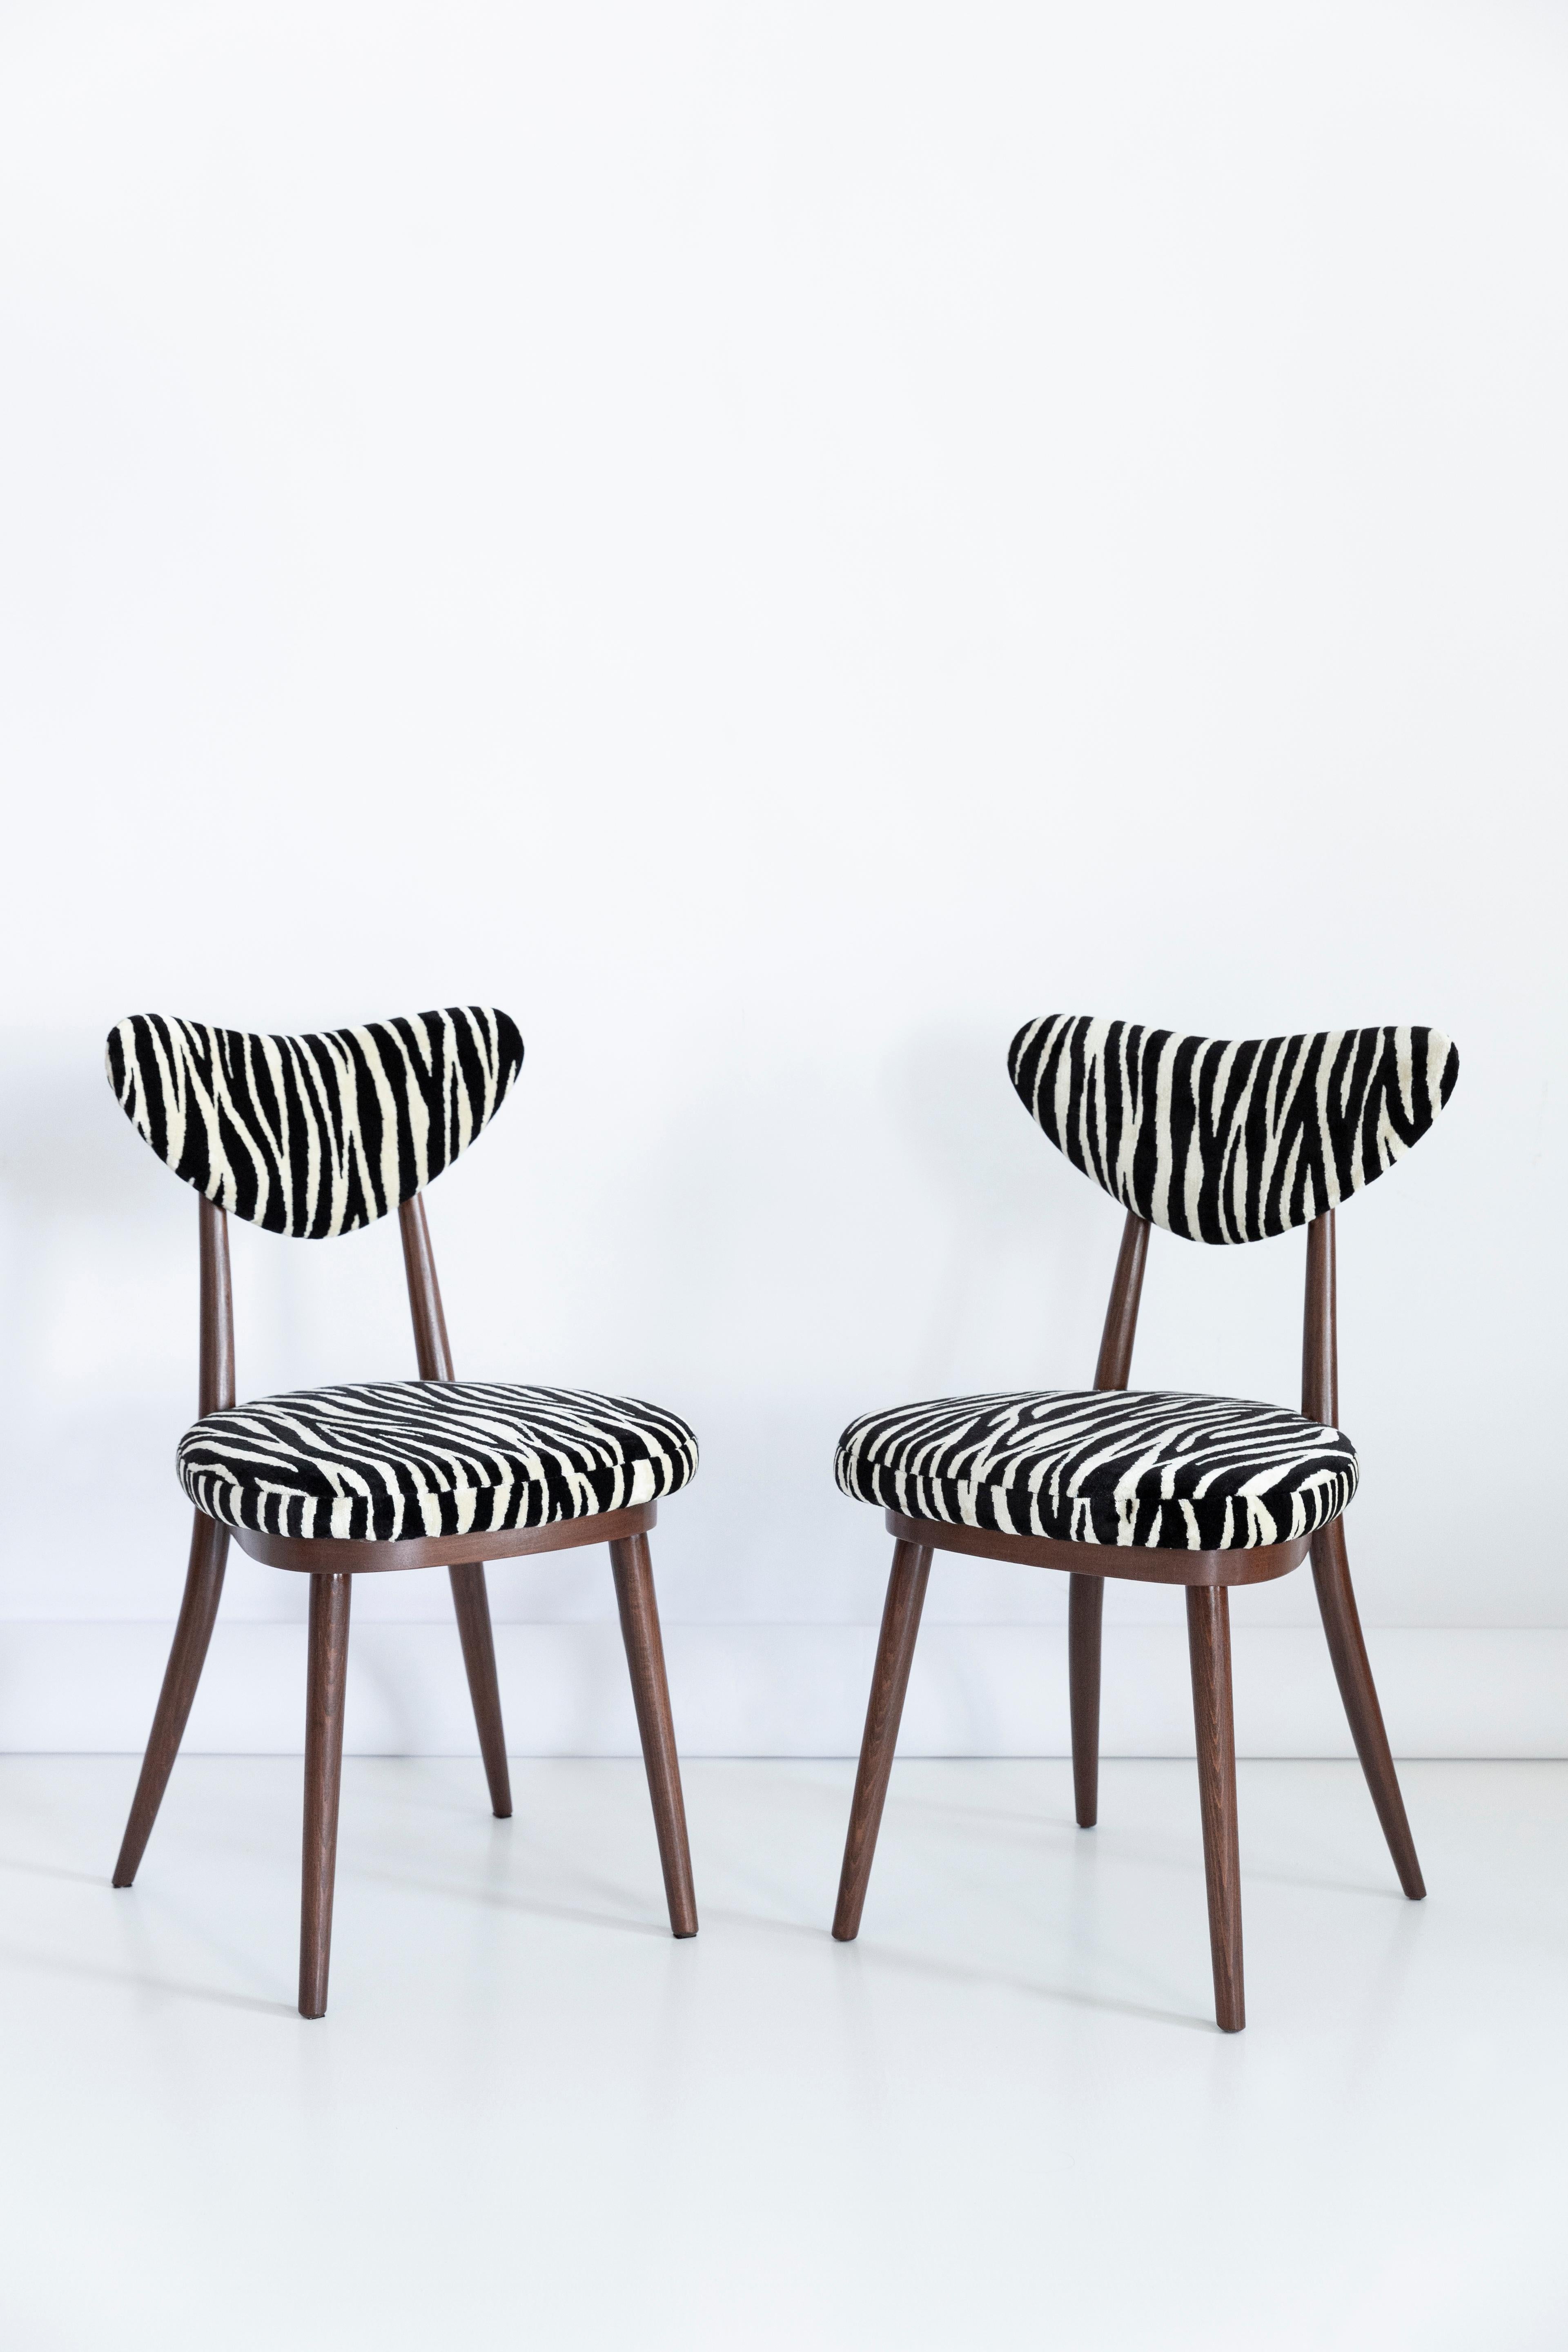 20th Century Set Midcentury Zebra Black White Heart Chairs, Hollywood Regency, Poland, 1960s For Sale